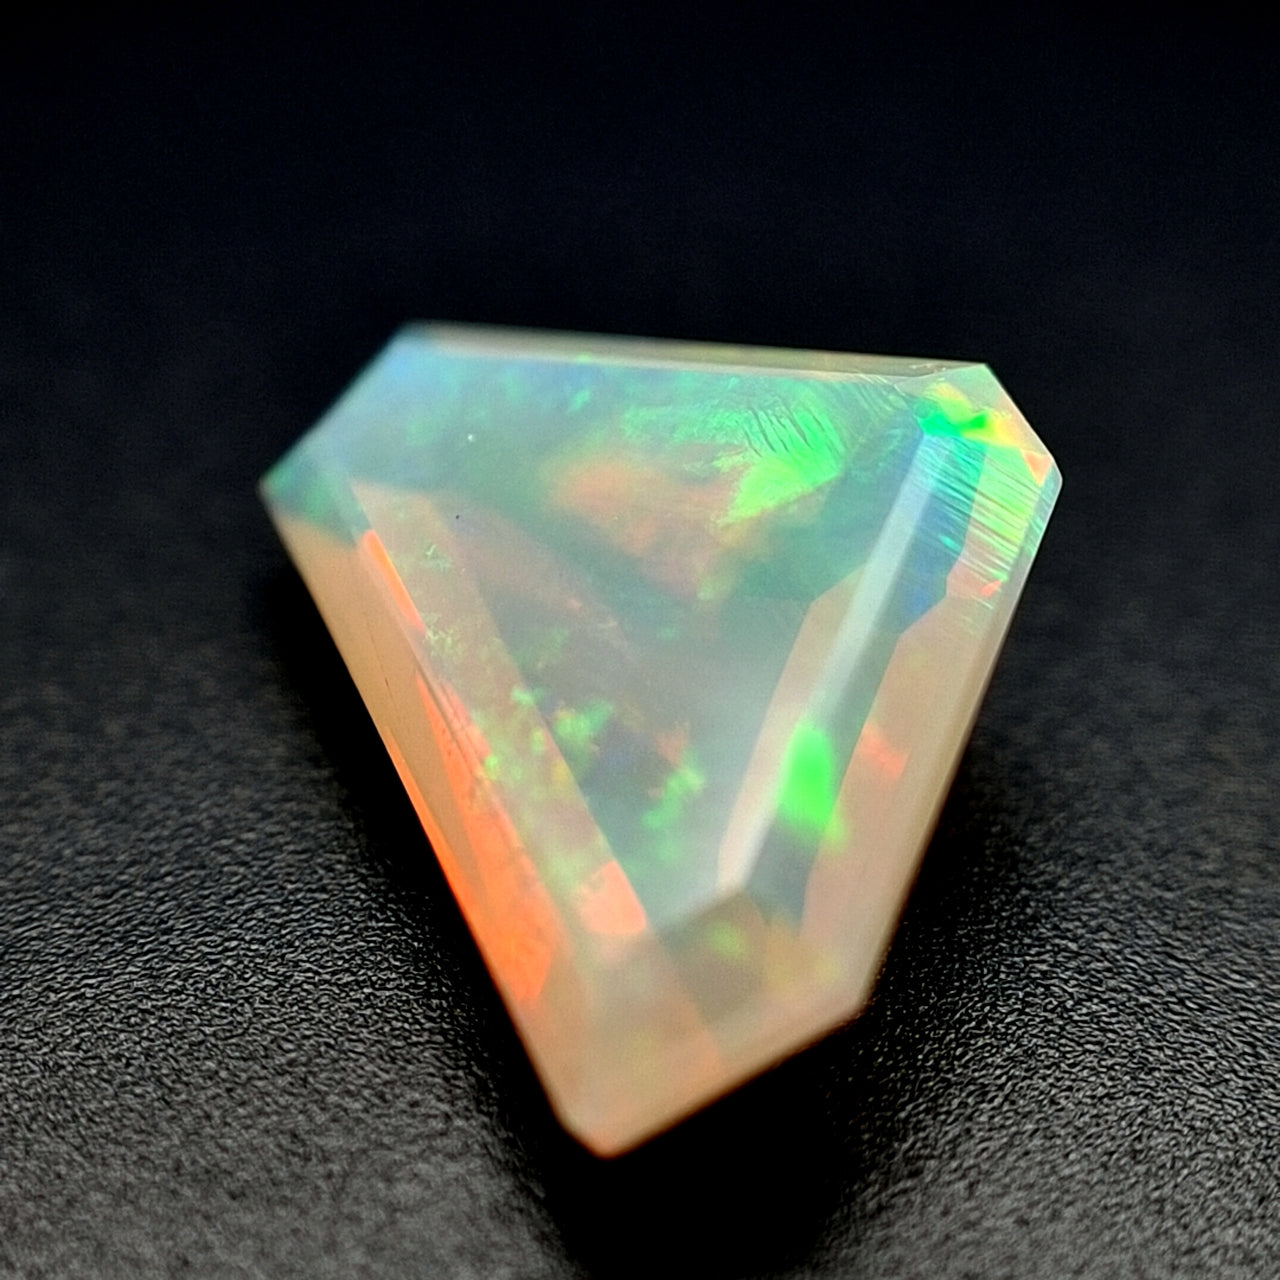 3.92ct Australian Opal - Free Form